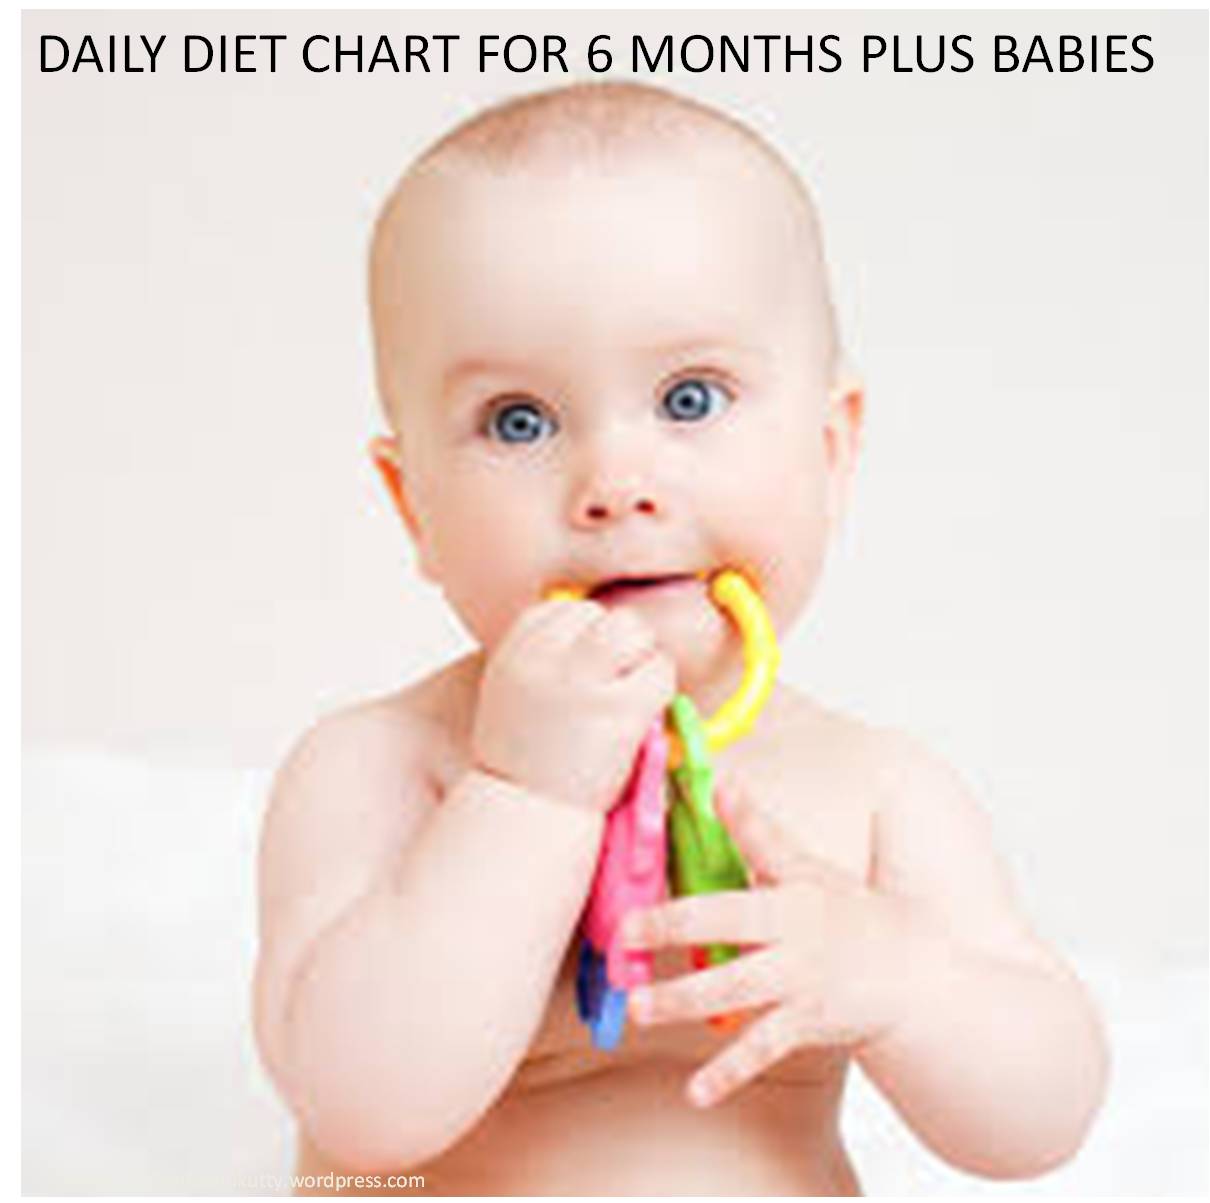 six months plus babies daily diet chart